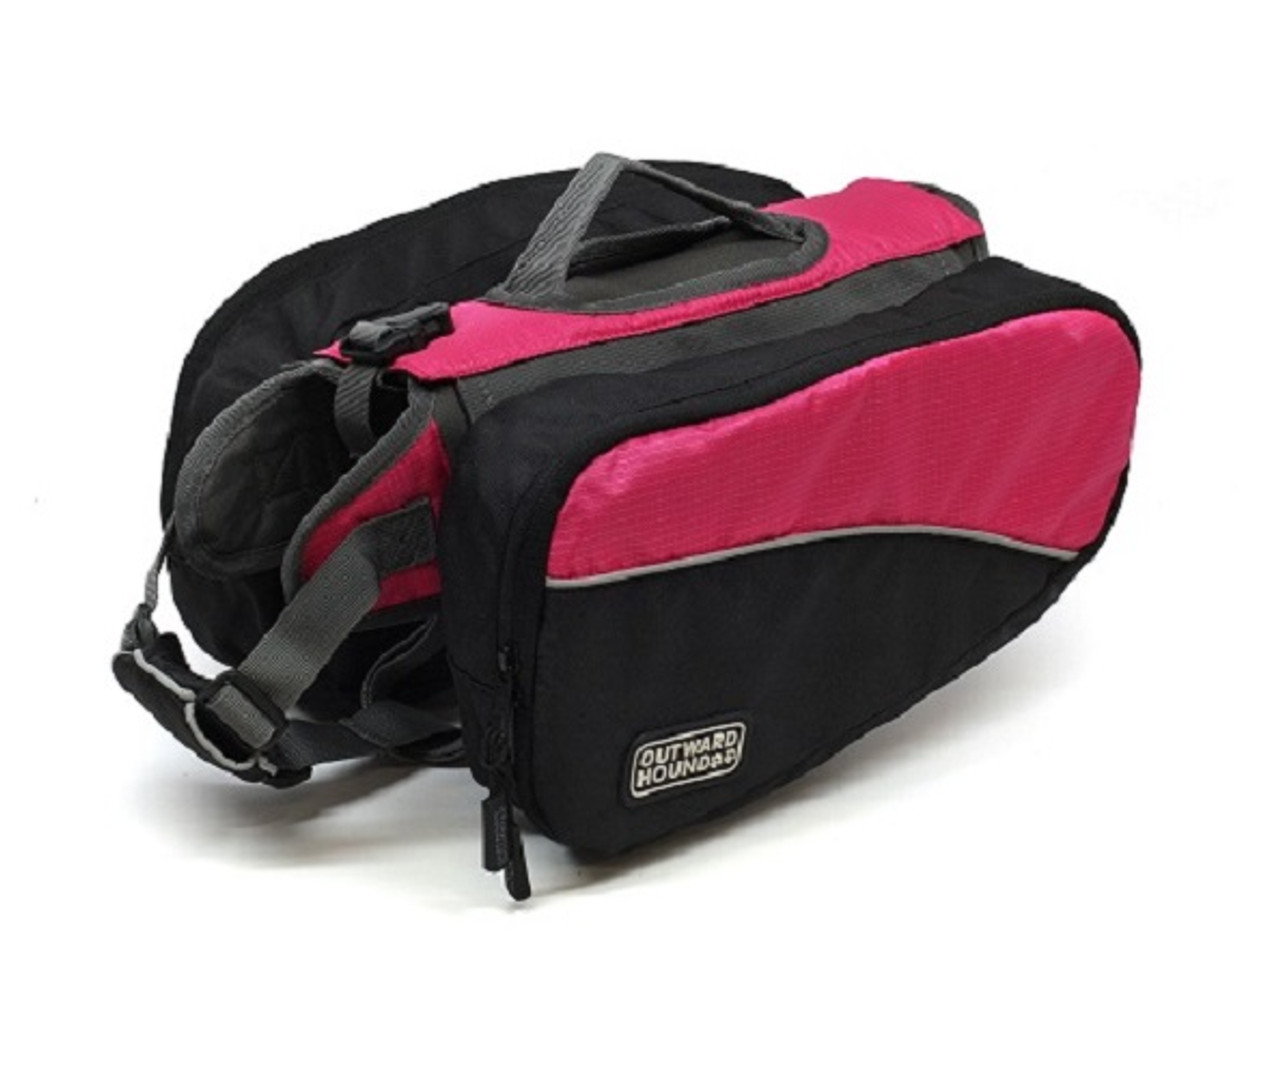 Outward Hound Kyjen 22010 Quick Release Backpack Saddlebag Style Dog  Backpack, Medium, Green Green Medium